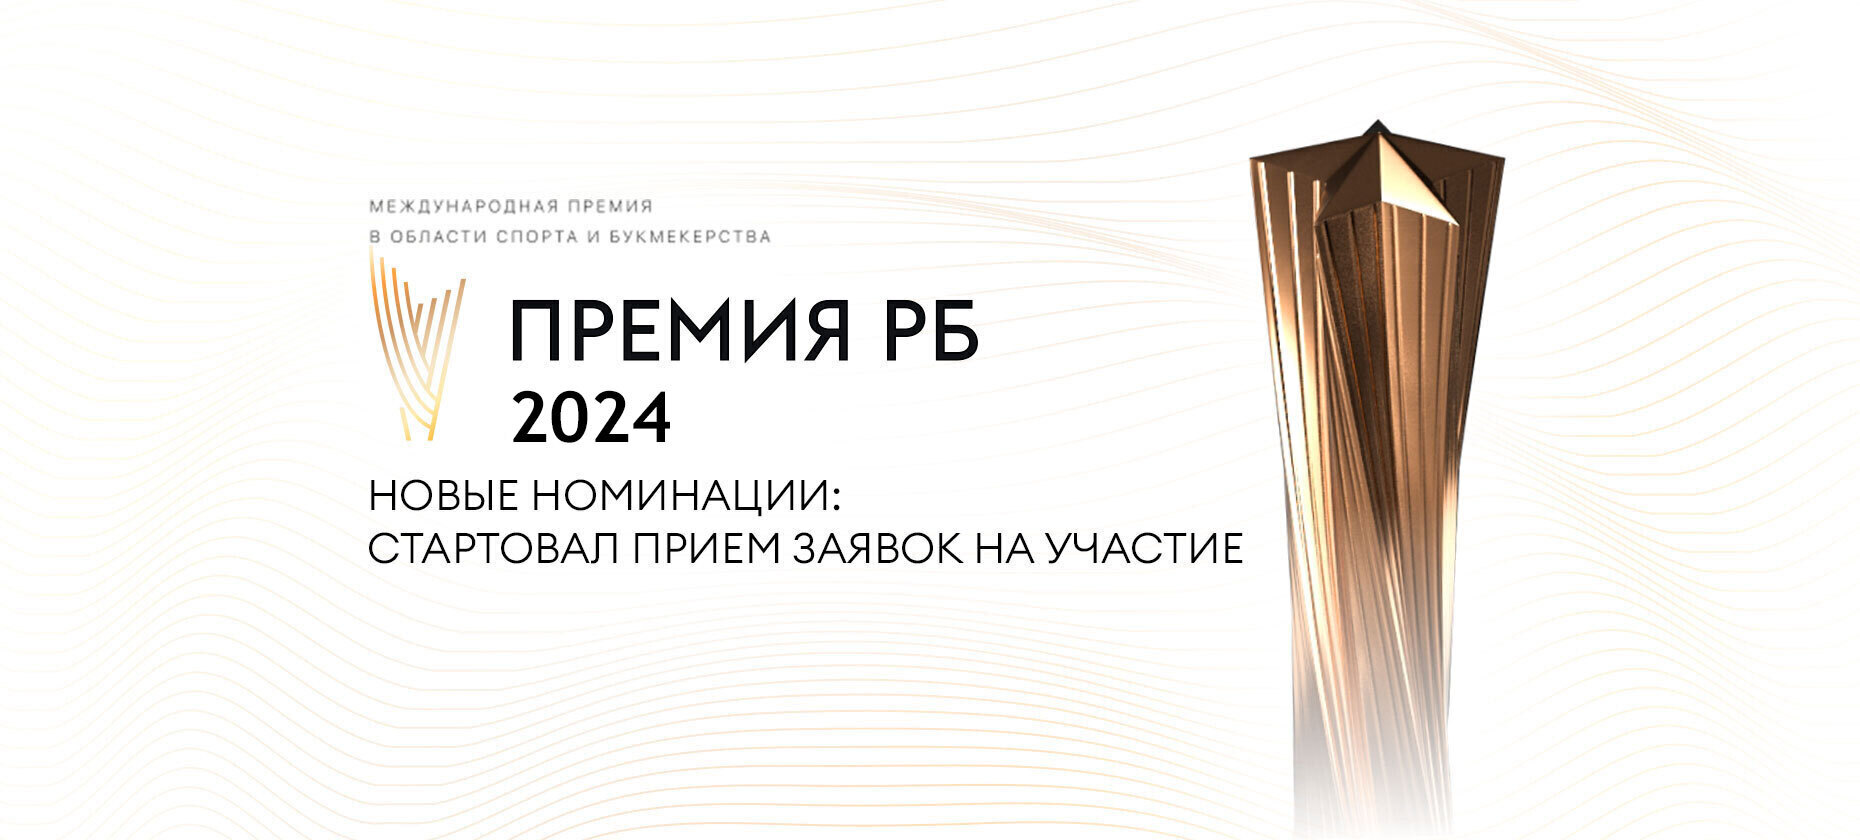 Рцэ 2024 беларусь результаты. Литературная премия Беларуси 2024. Баннер года Беларусь 2024.